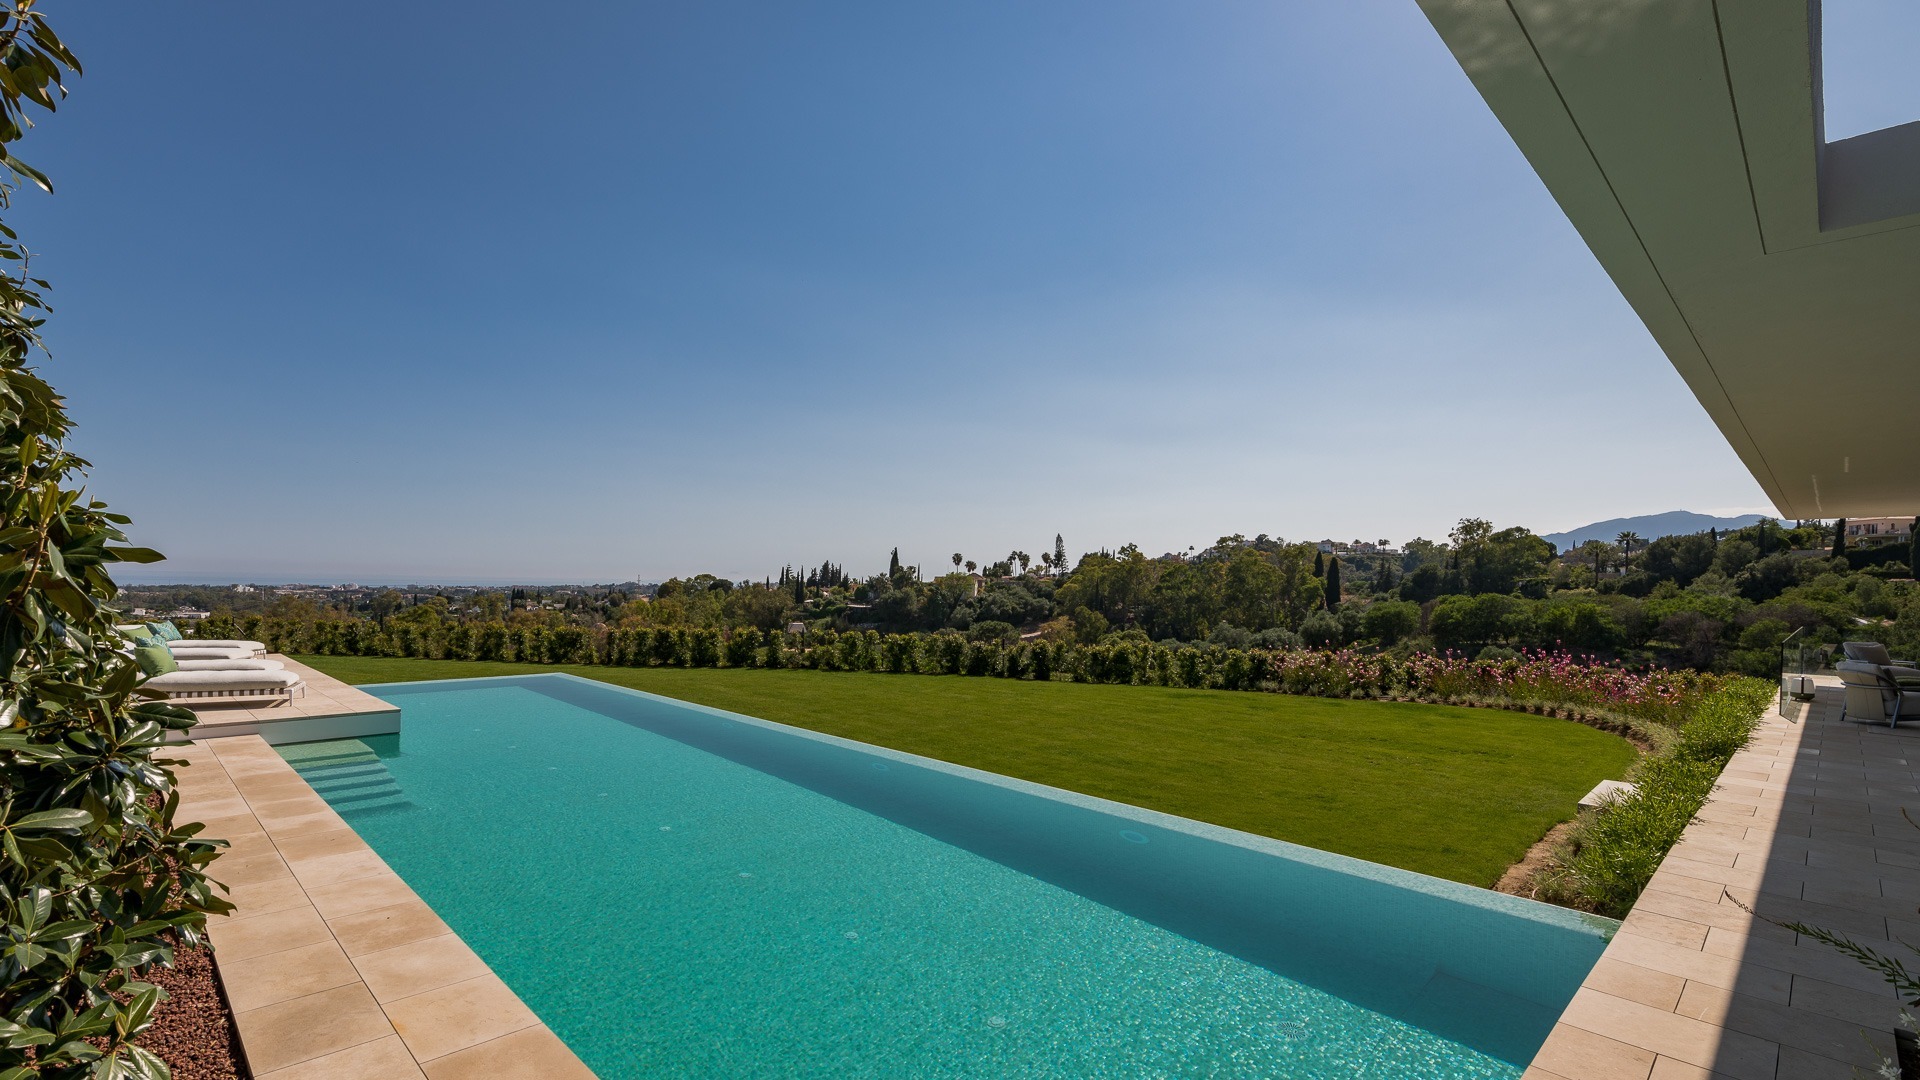 Exclusive top villa swimming pool - El Herrojo - Benahavis